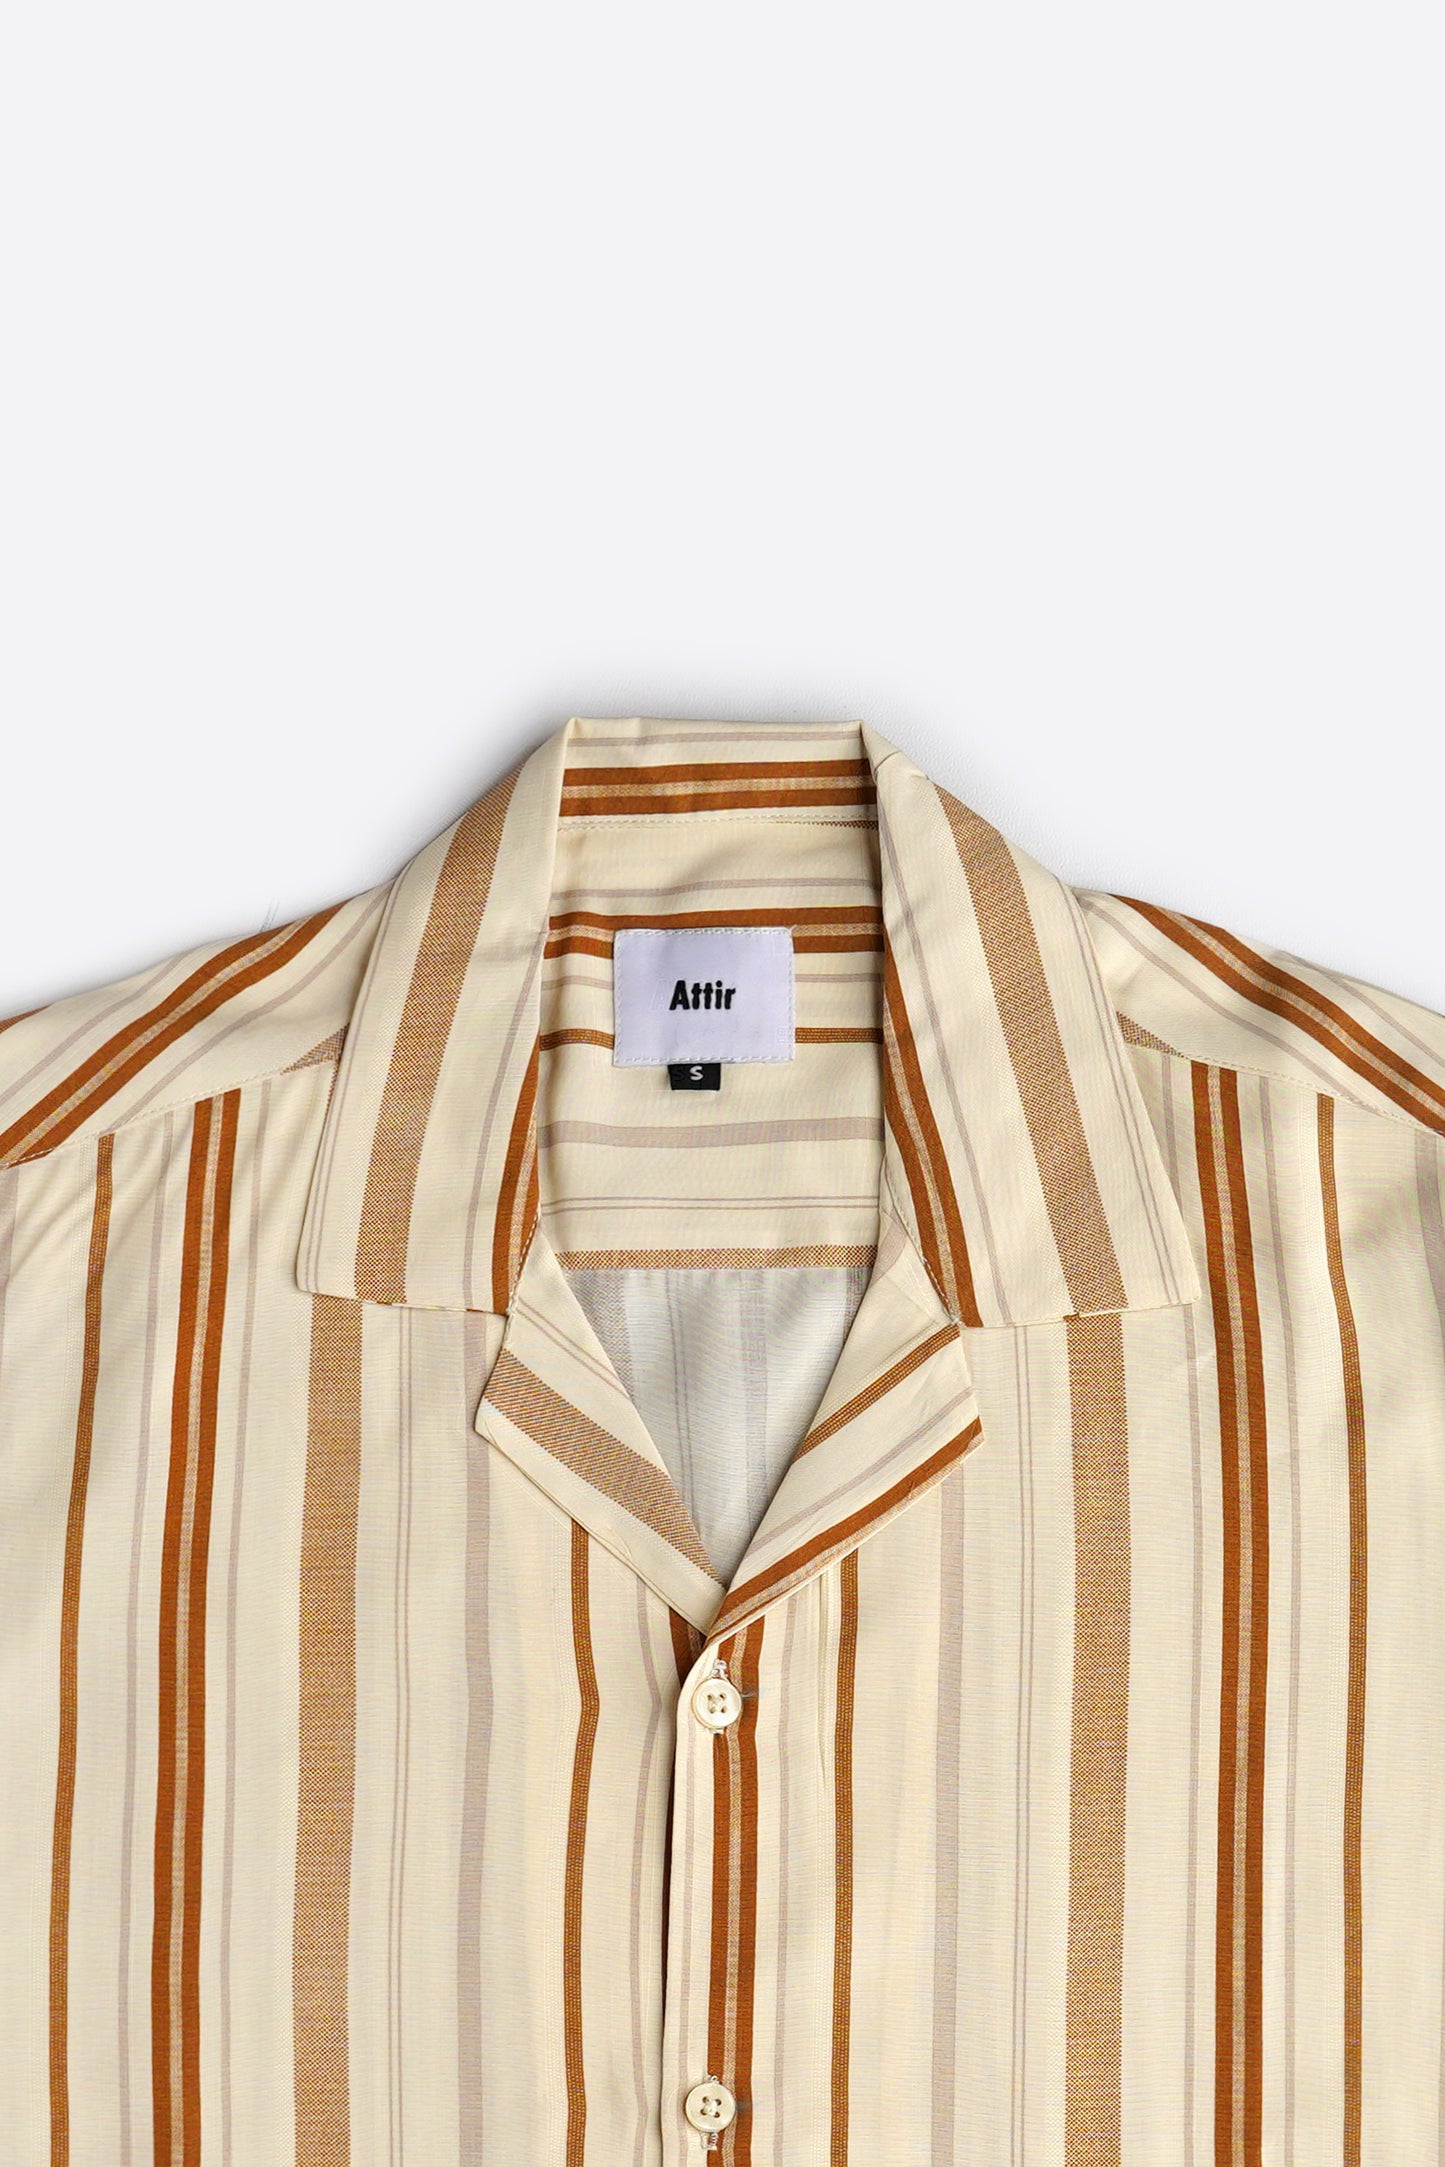 Striped Print Shirt